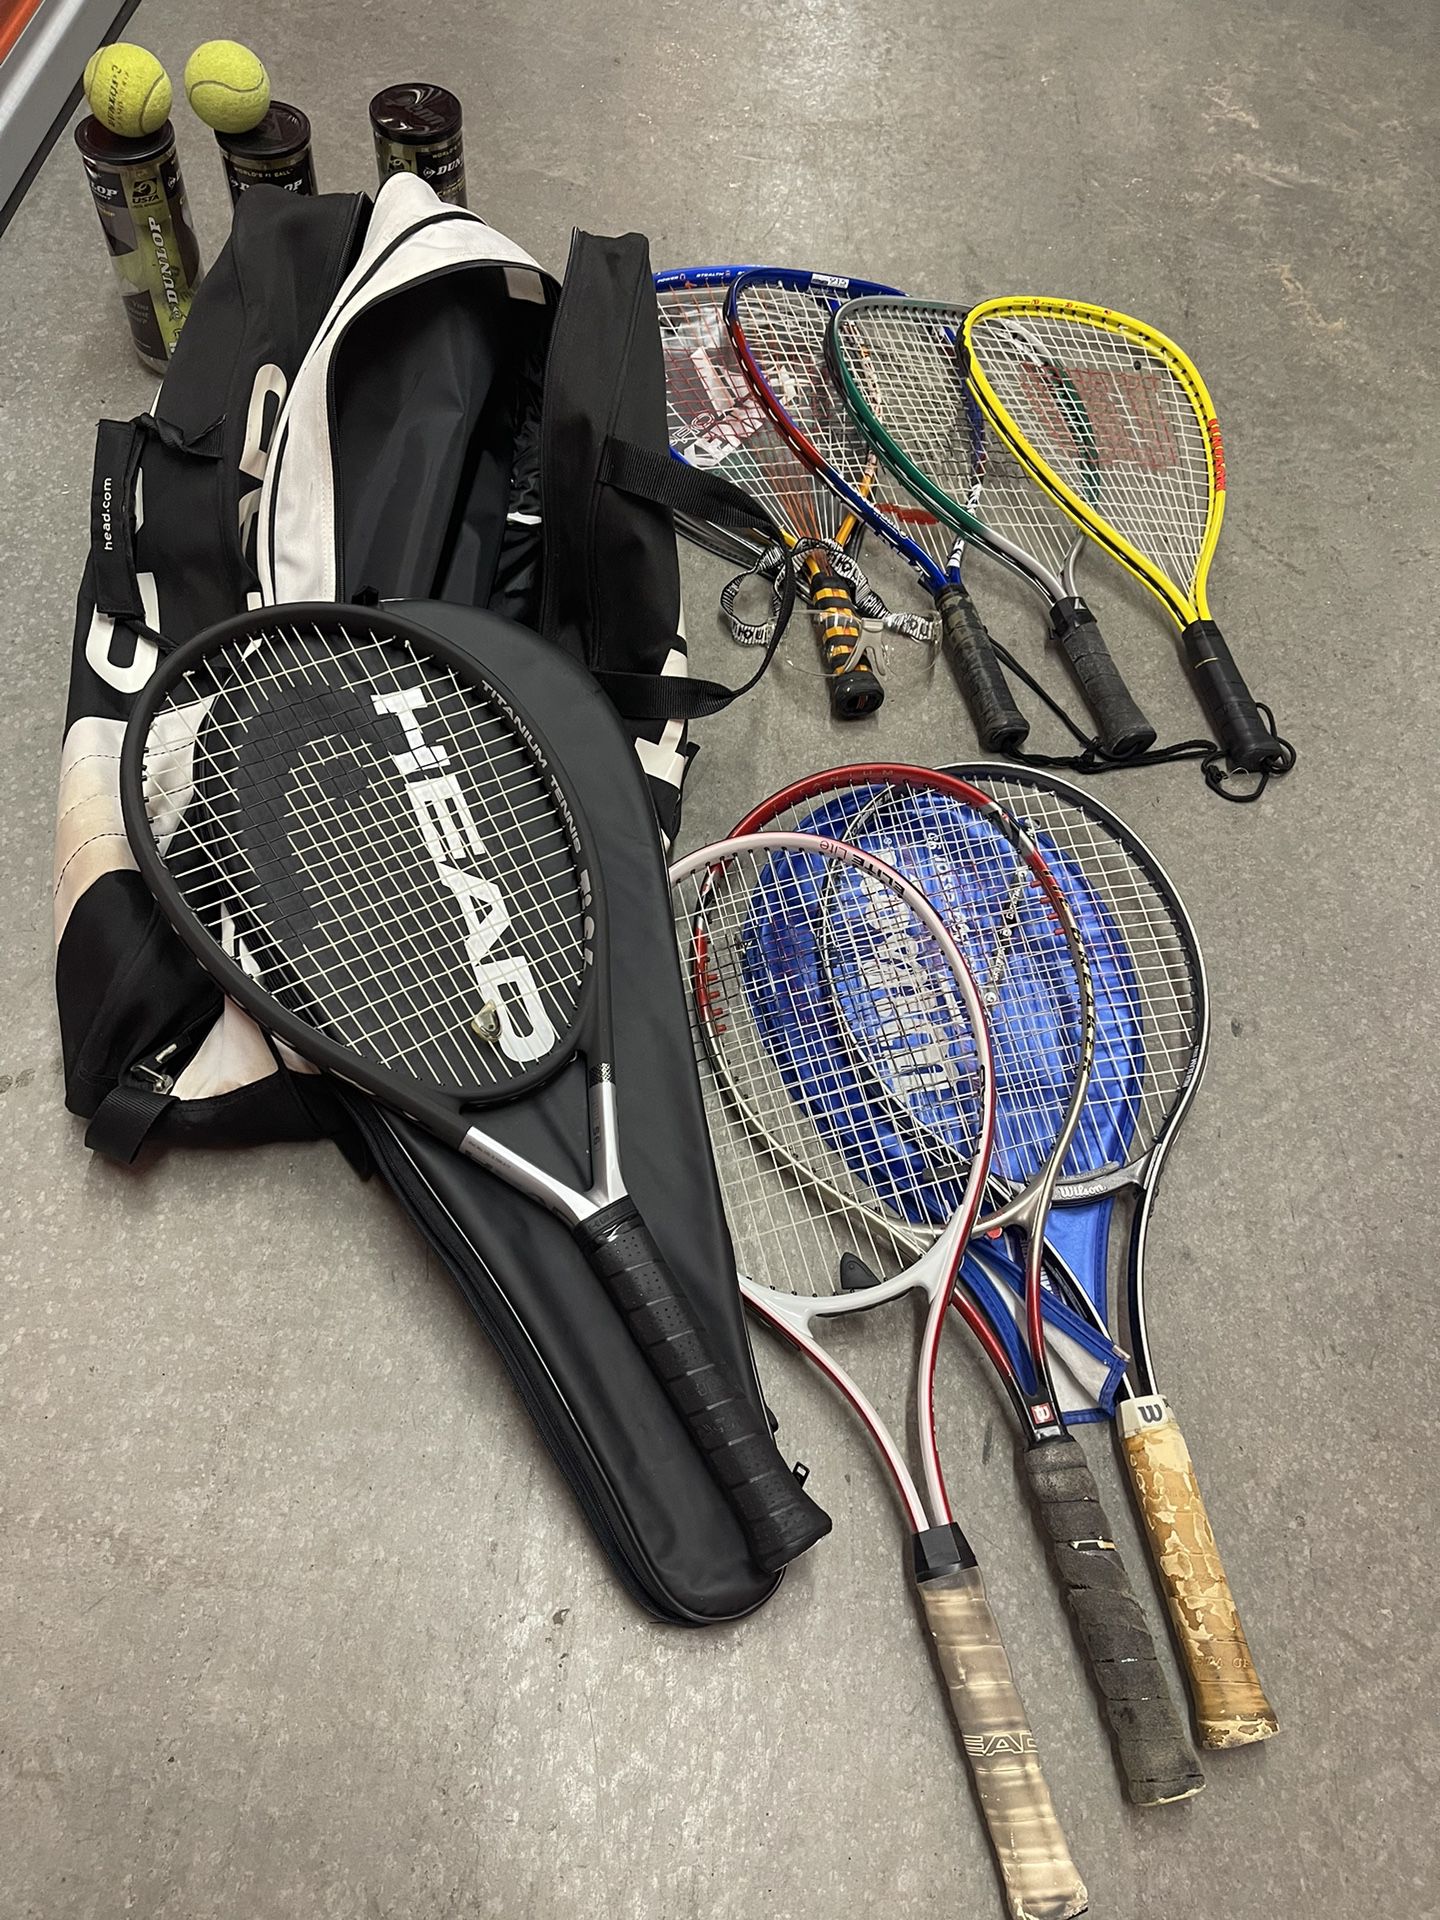 Tennis And Basketball Rackets